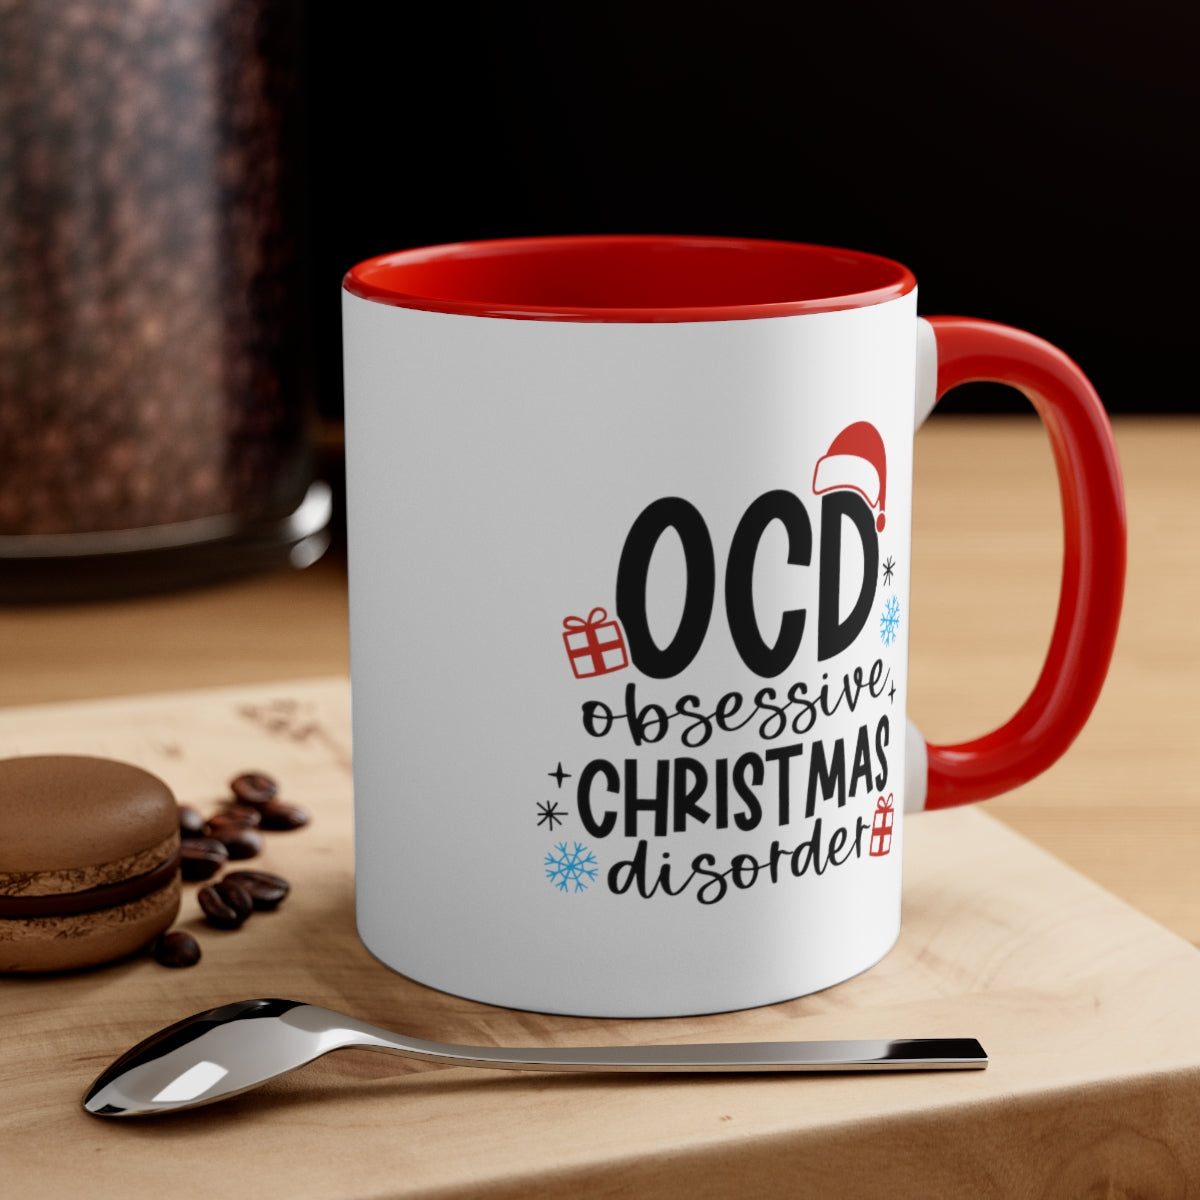 Obsessive Christmas Disorder | Christmas Coffee Mug | Sarcastic Coffee Mug | Funny Coffee Mug